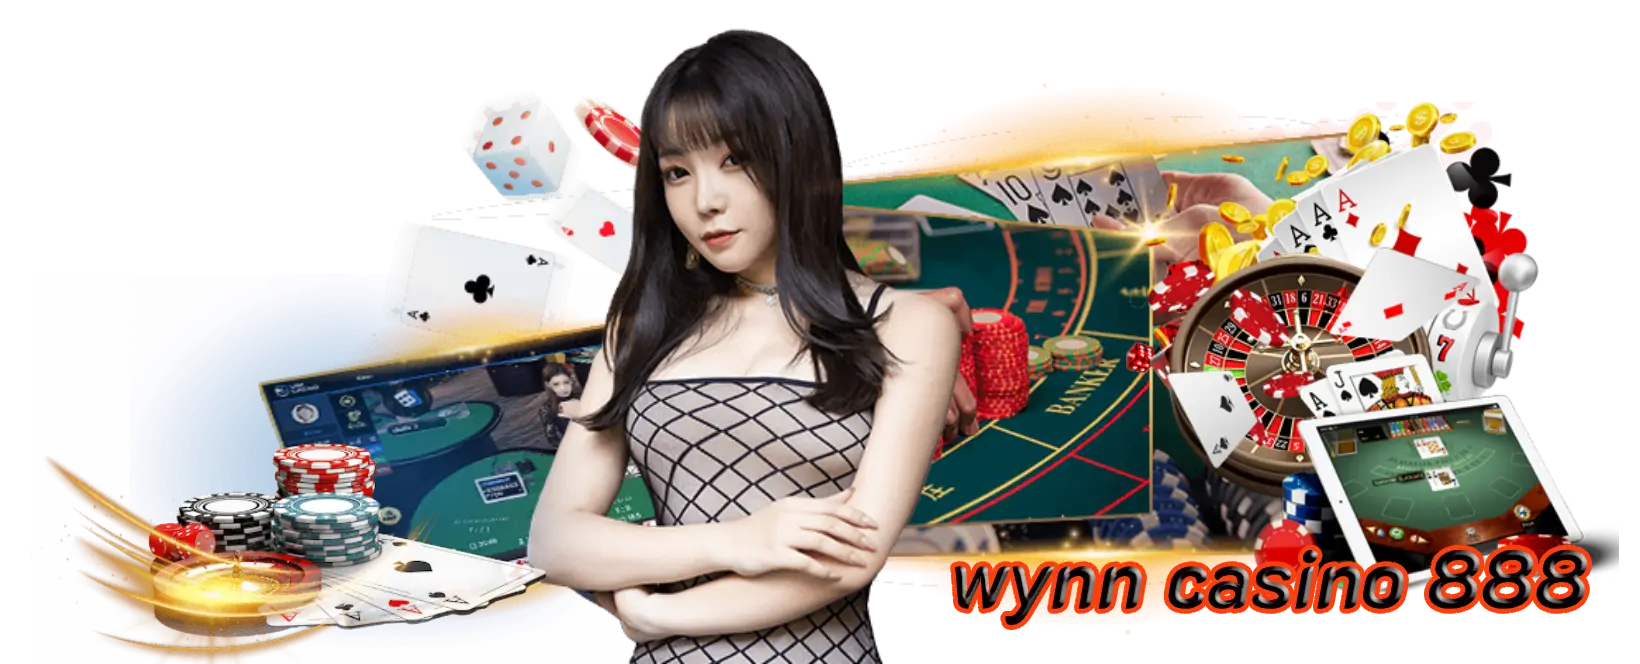 wynn casino 888 คาสิโนที่หรูหราที่สุดทันสมัยสุดในยุคนี้